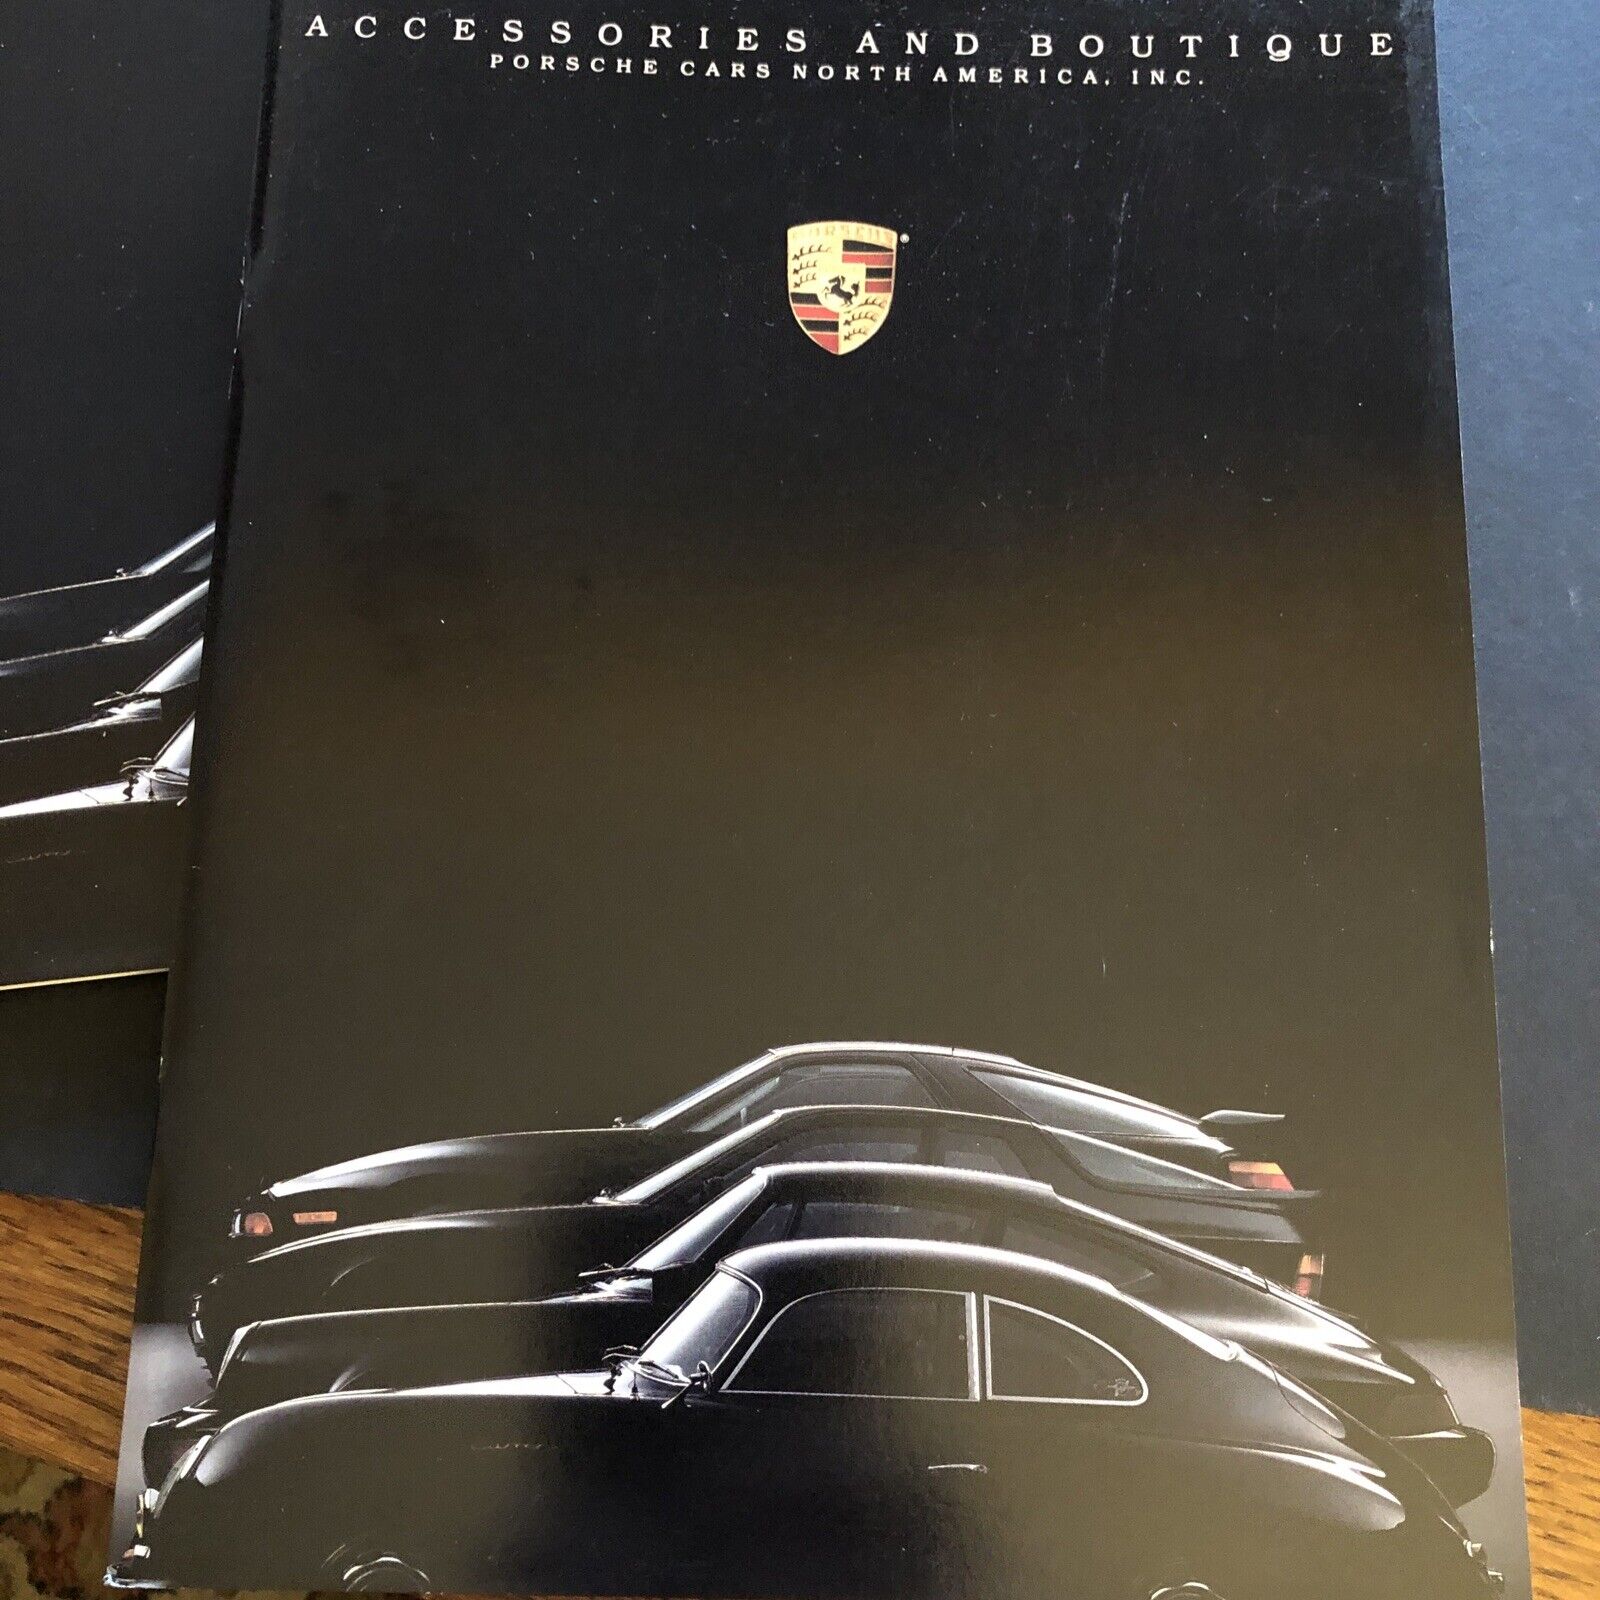 Porsche 1990 accessory and boutique catalogue